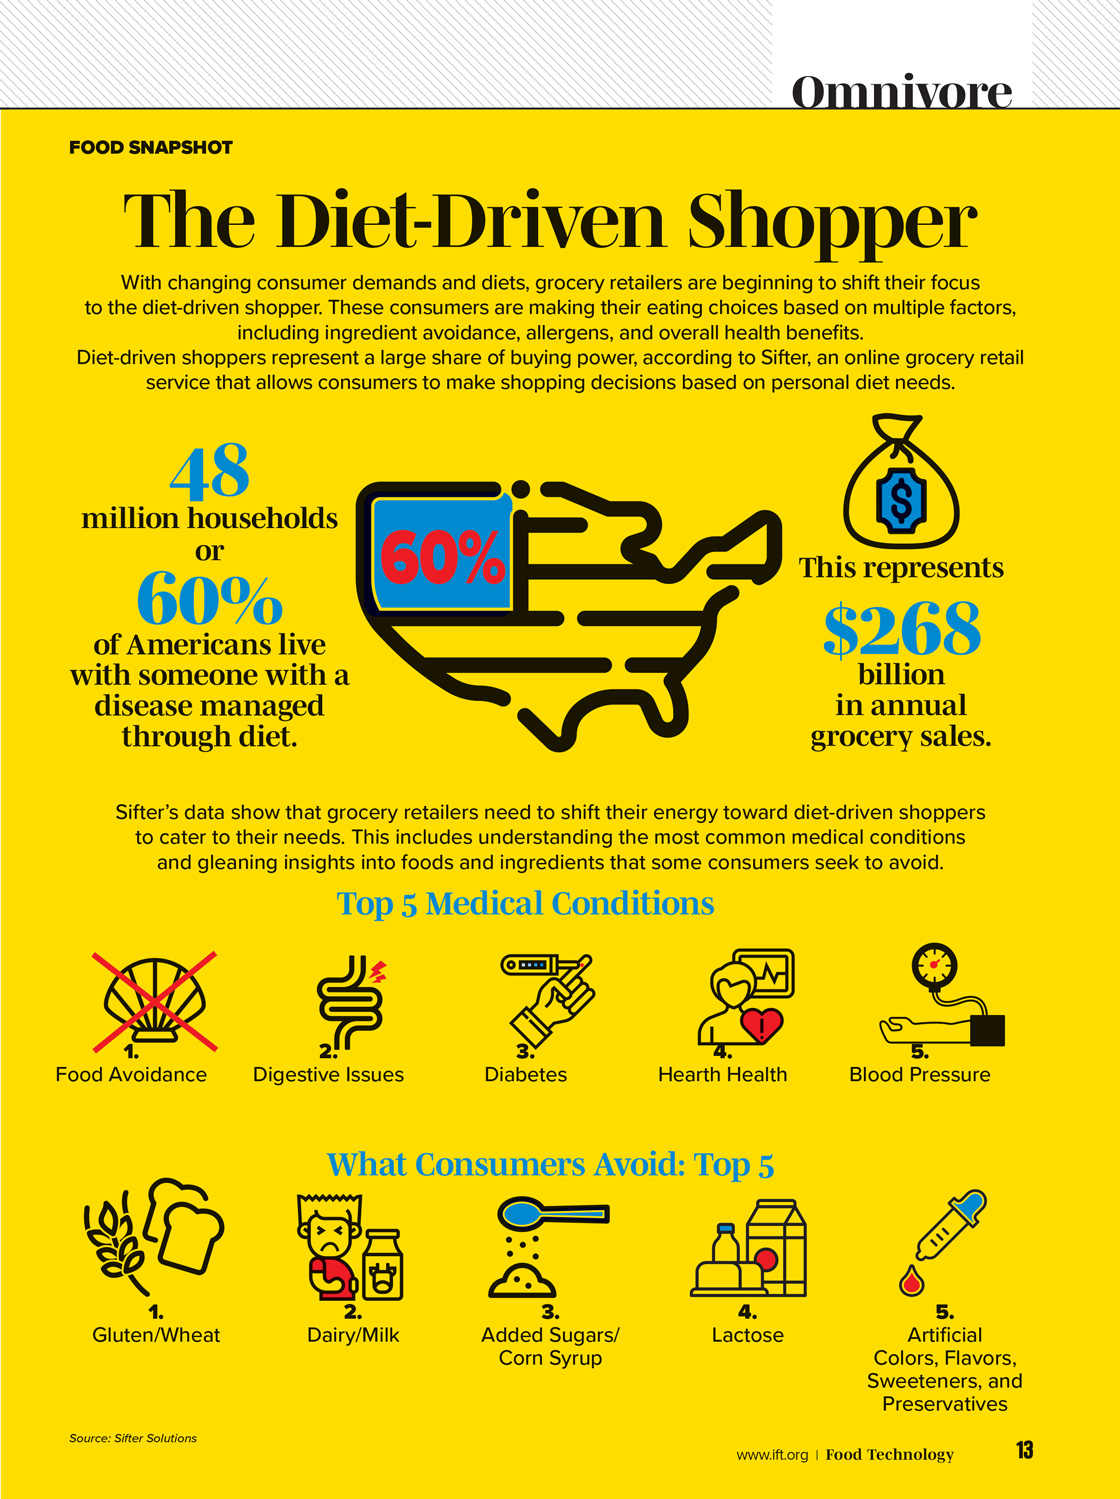 The Diet-Driven Shopper